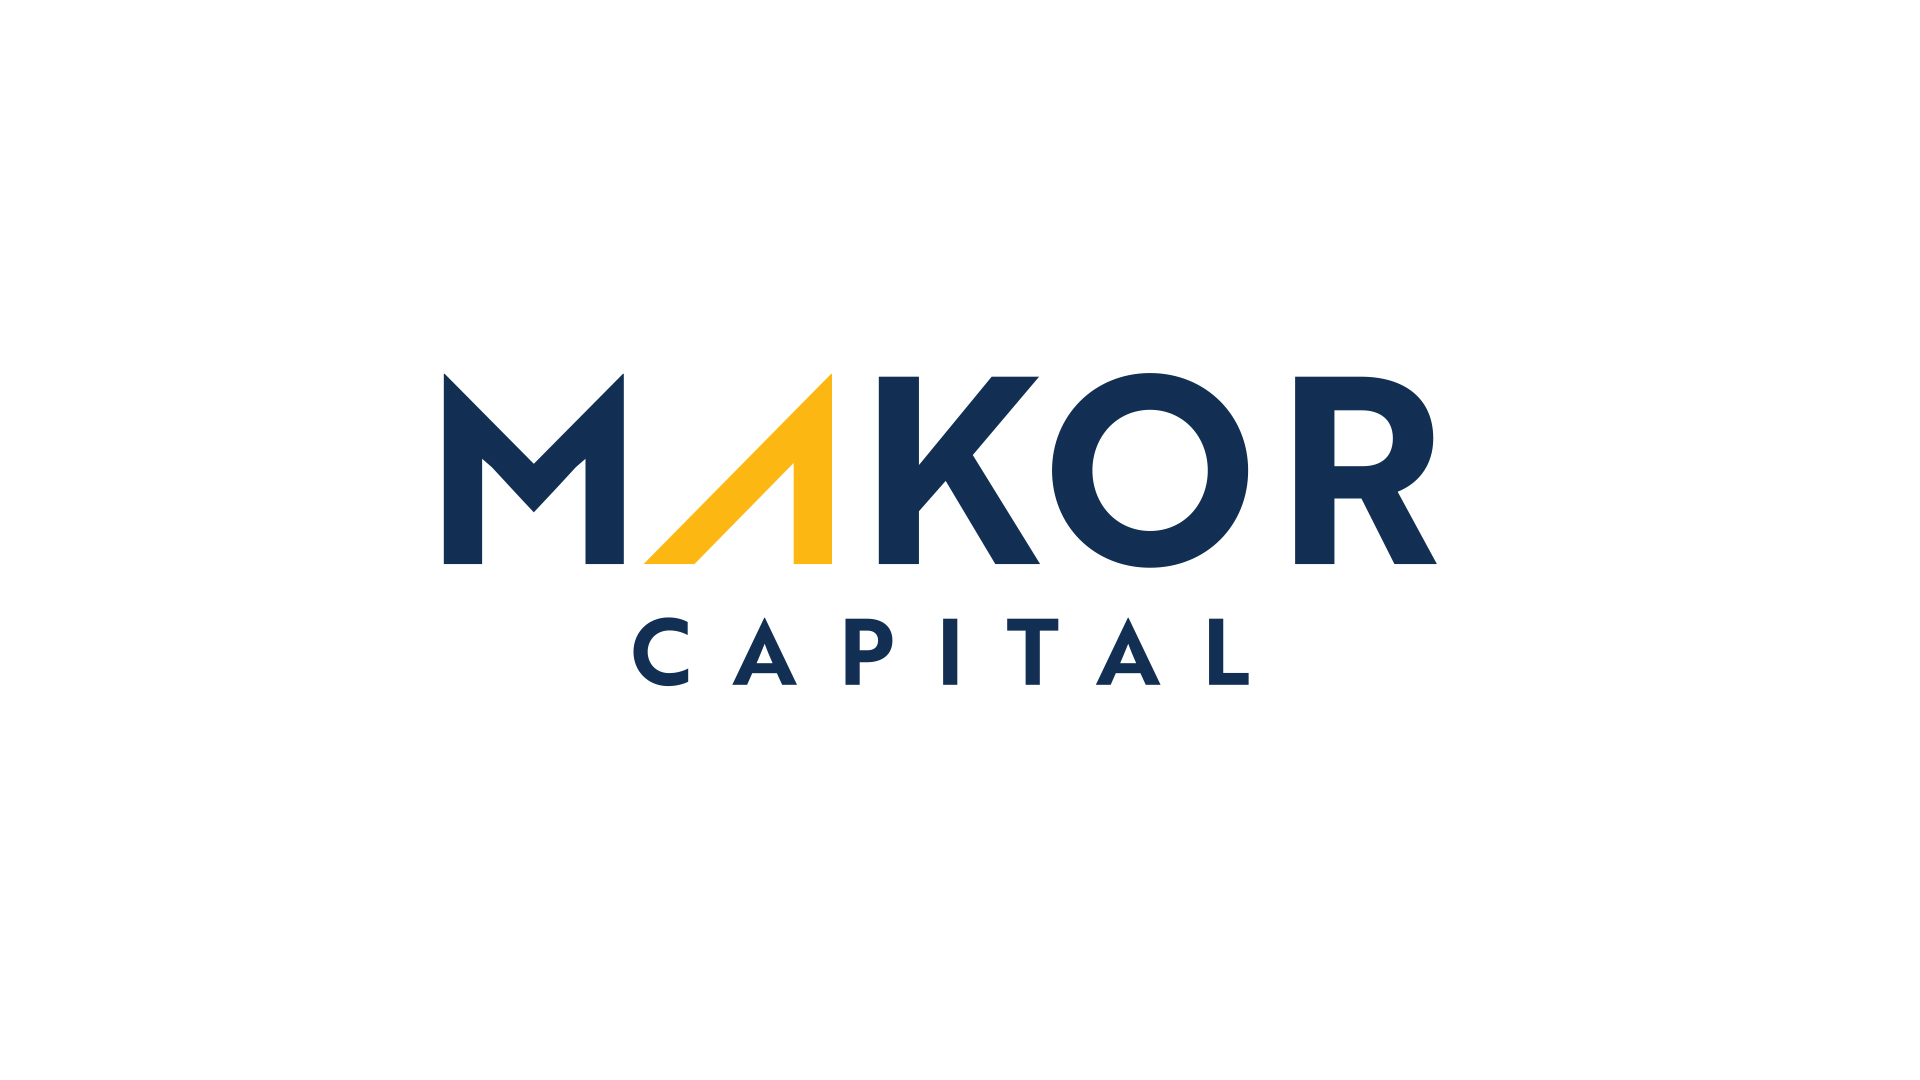 makor capital logo on white